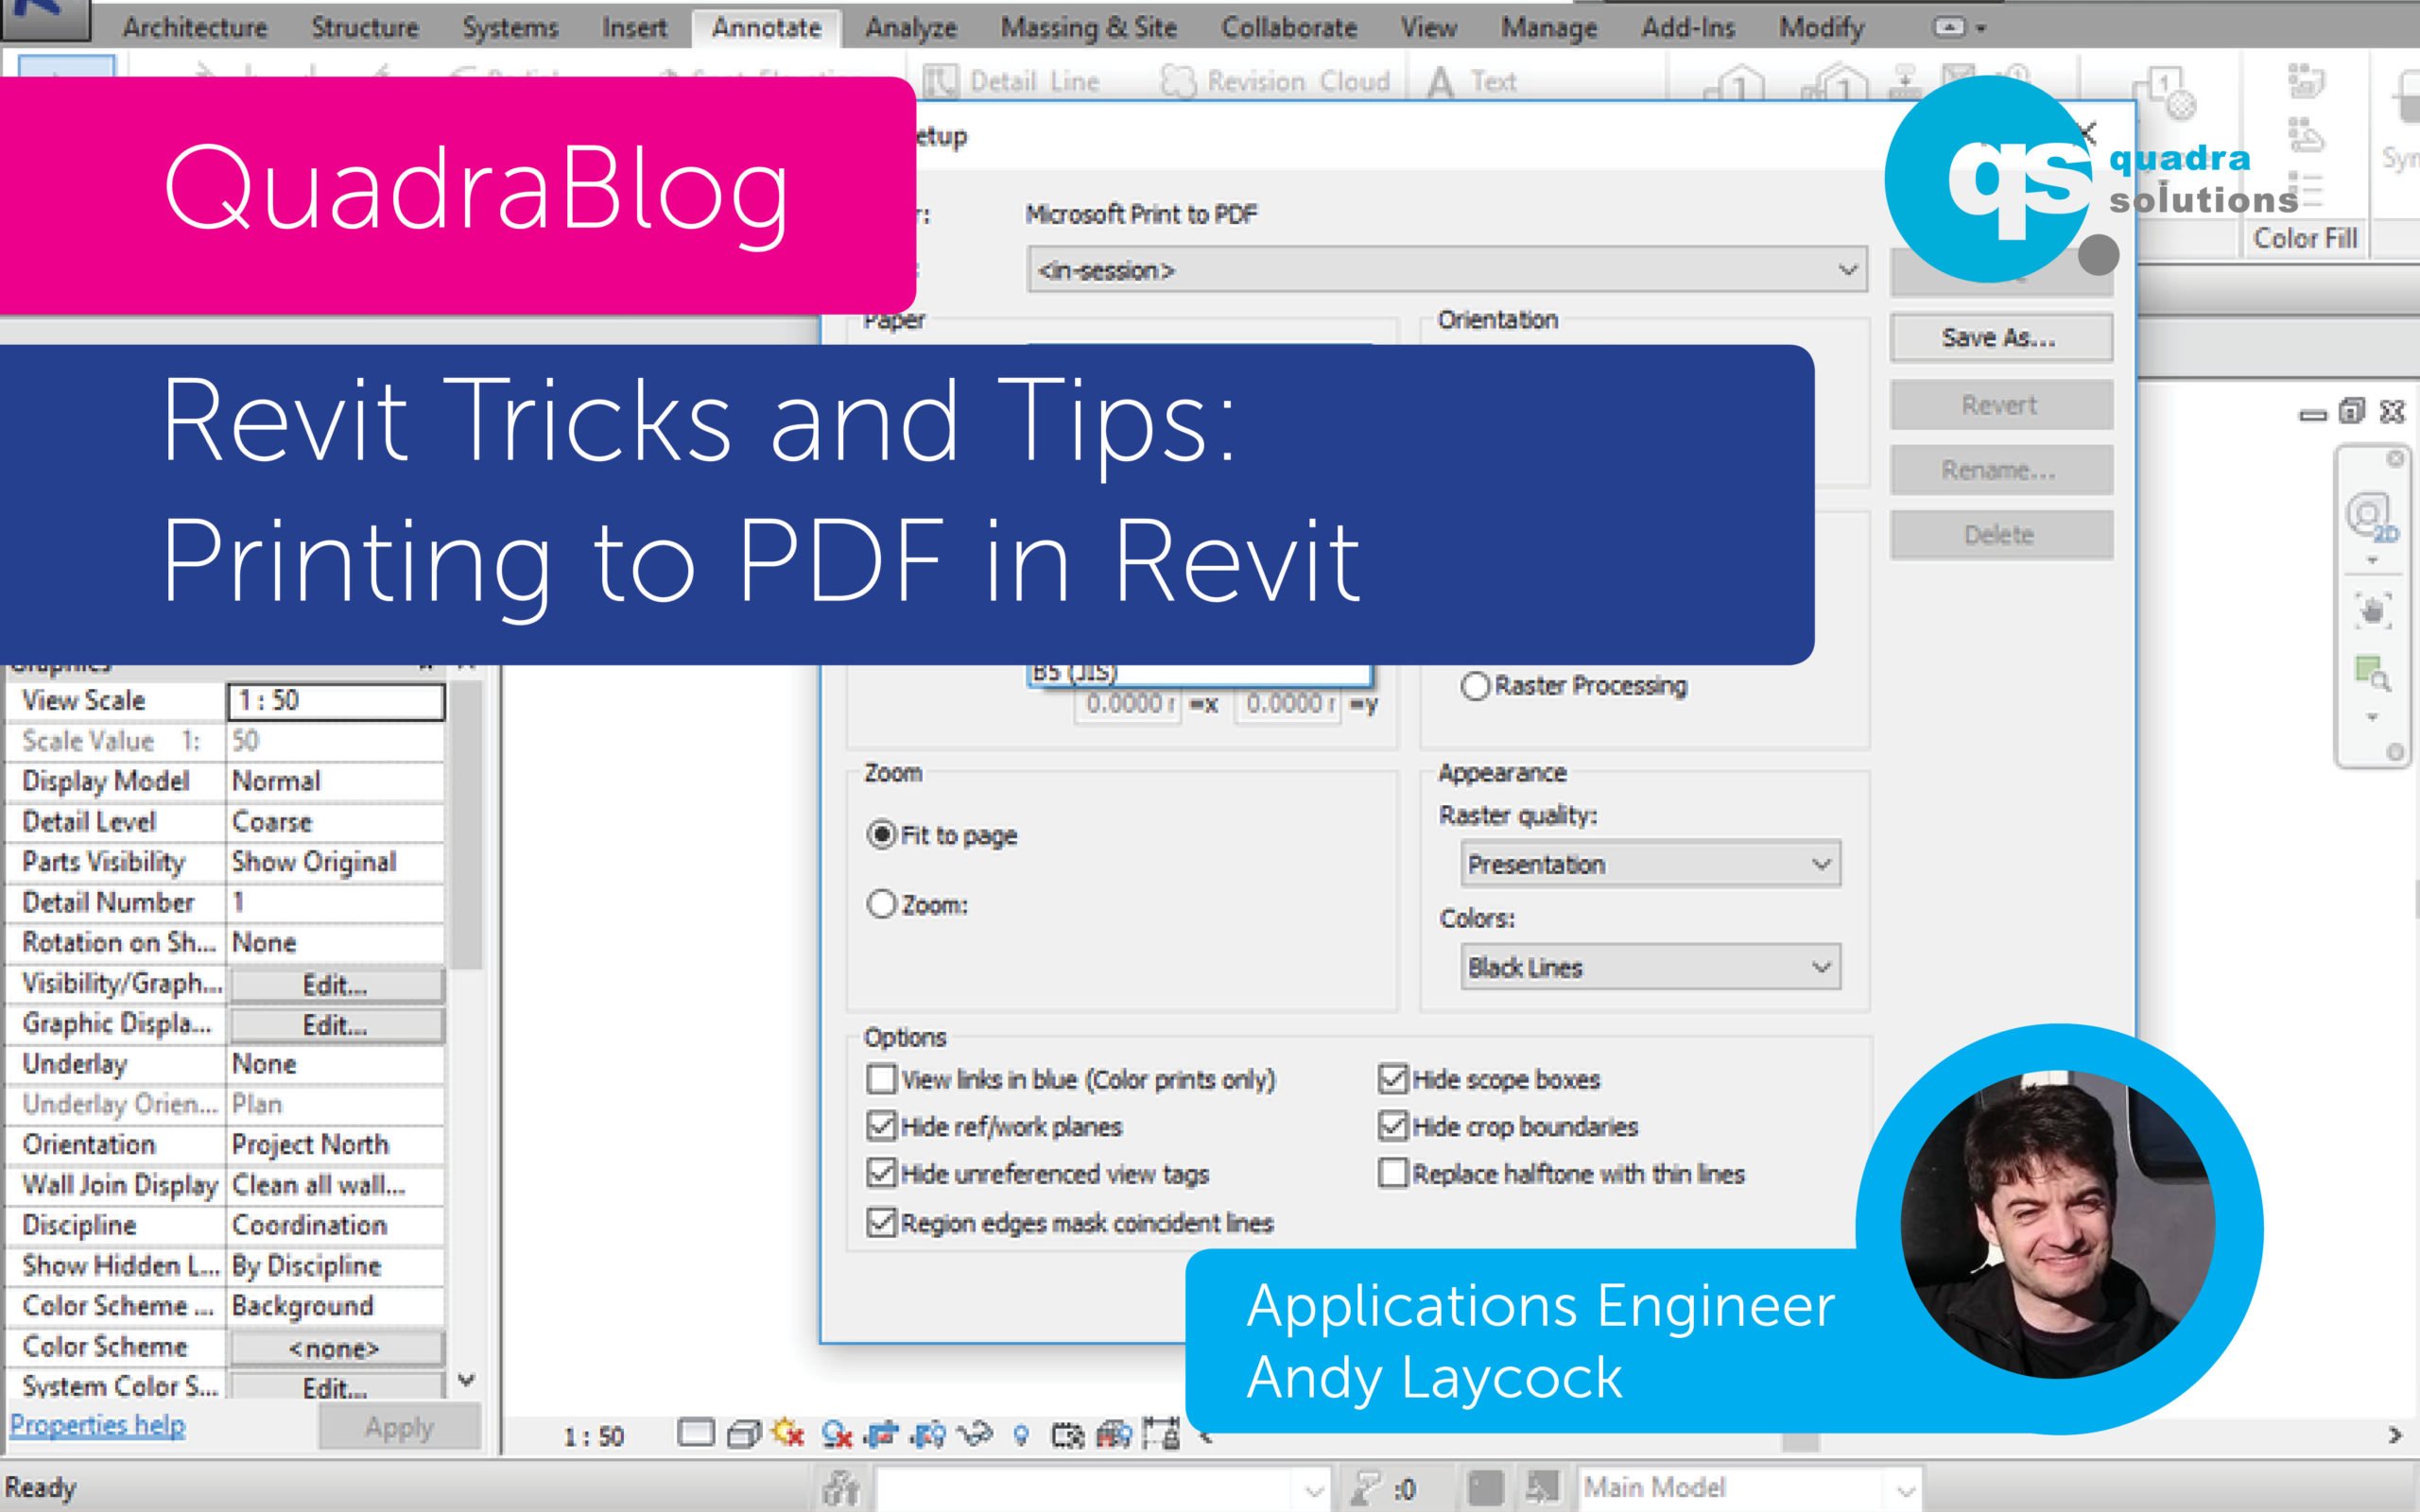 Revit Tricks and Tips: Printing to PDF in Revit